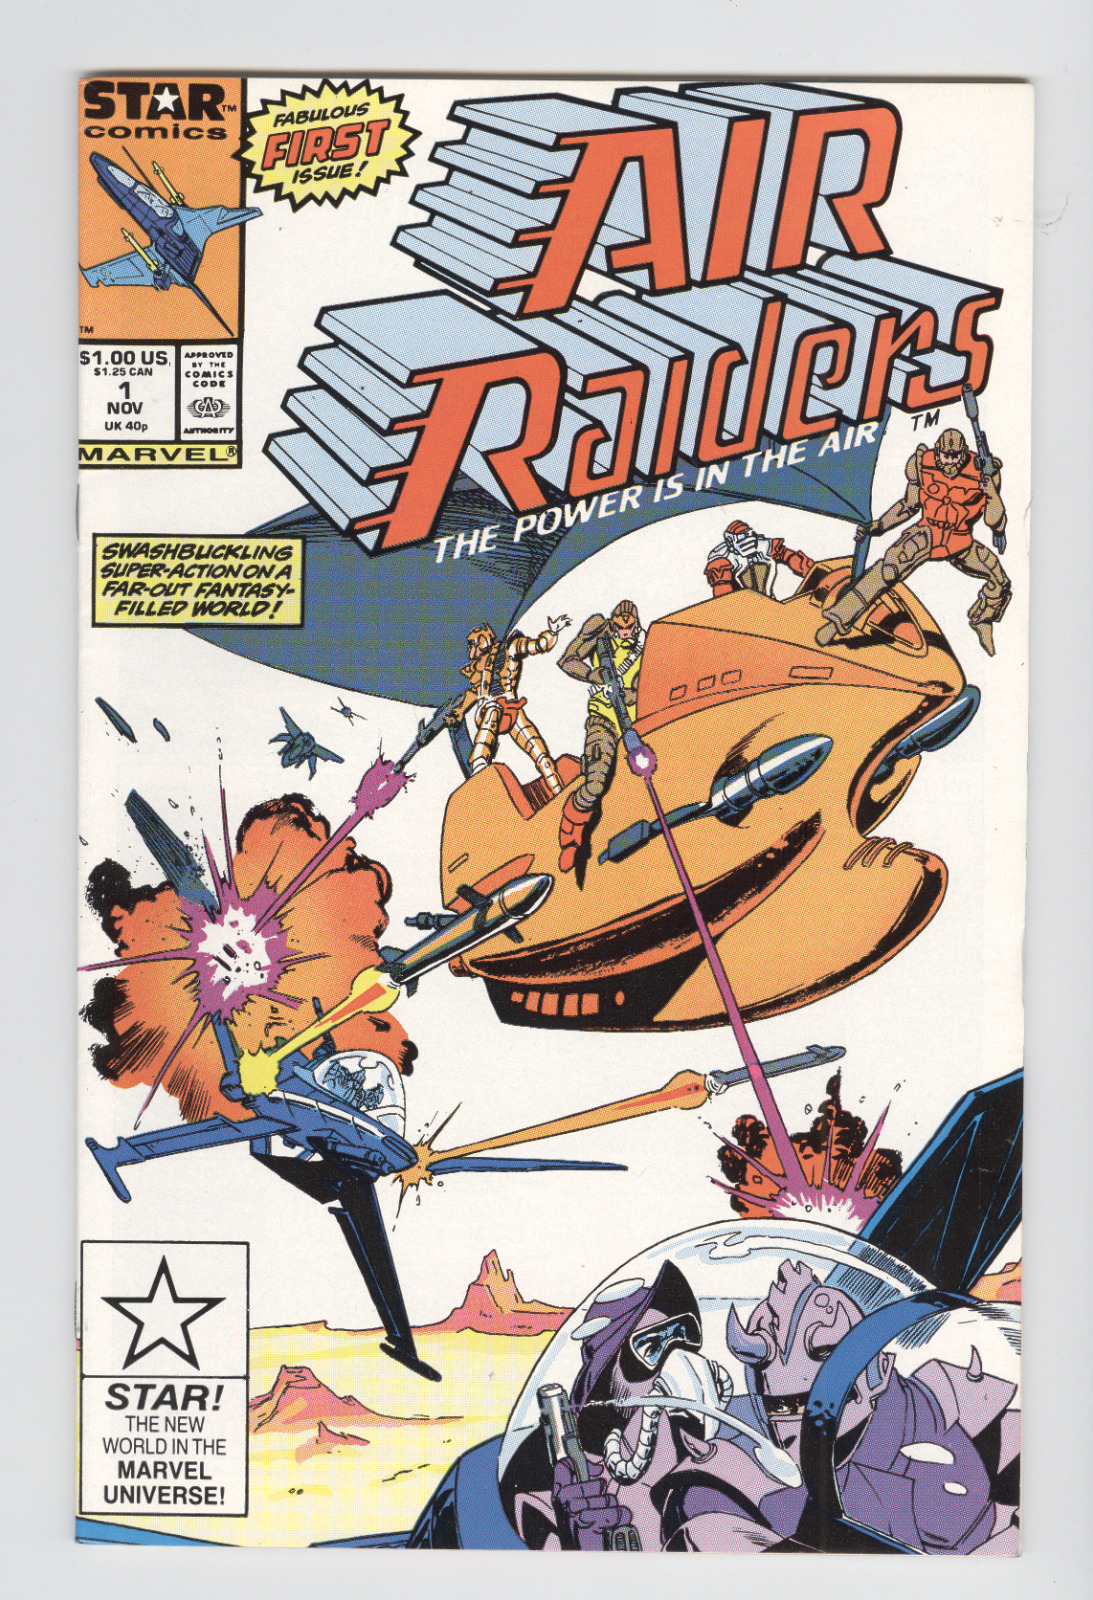 Air Raiders #1 November 1987 VF